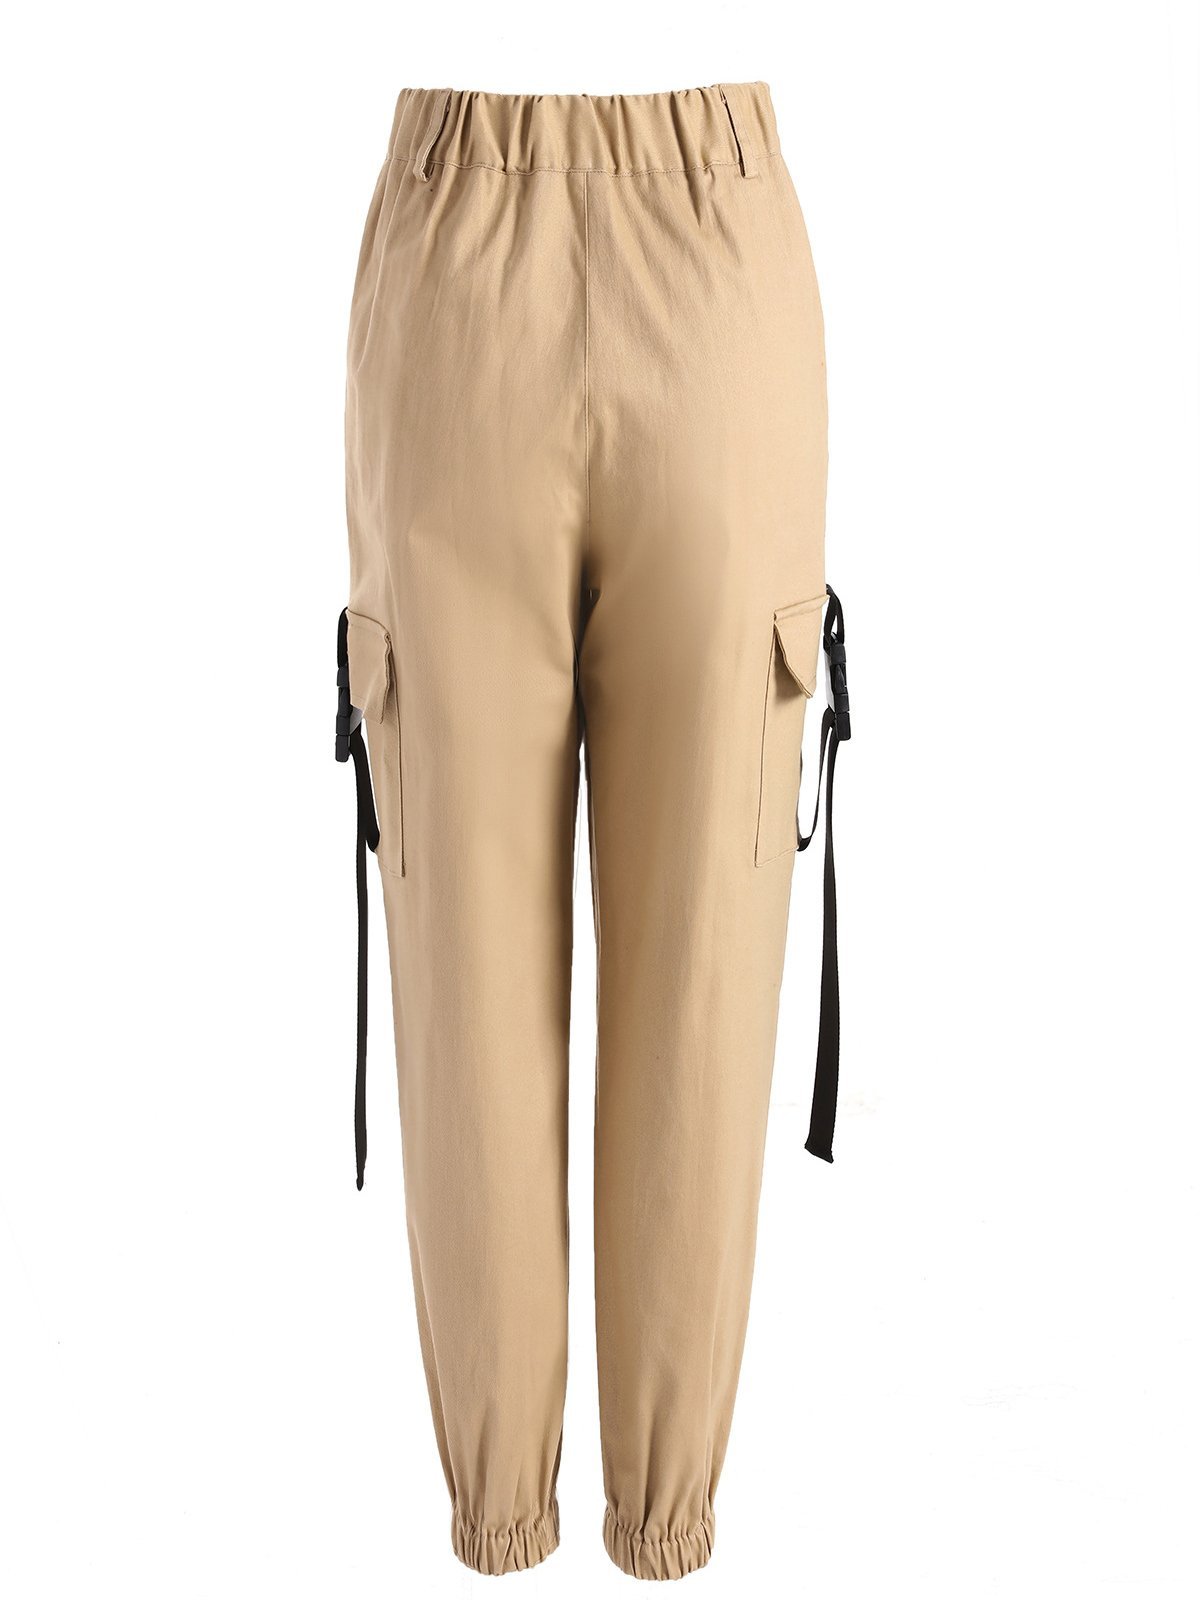 Bag Buckle Casual Pants Harem Pants Cargo Pants - Pants - INS | Online Fashion Free Shipping Clothing, Dresses, Tops, Shoes - 12/05/2021 - 120521 - Category_Pants